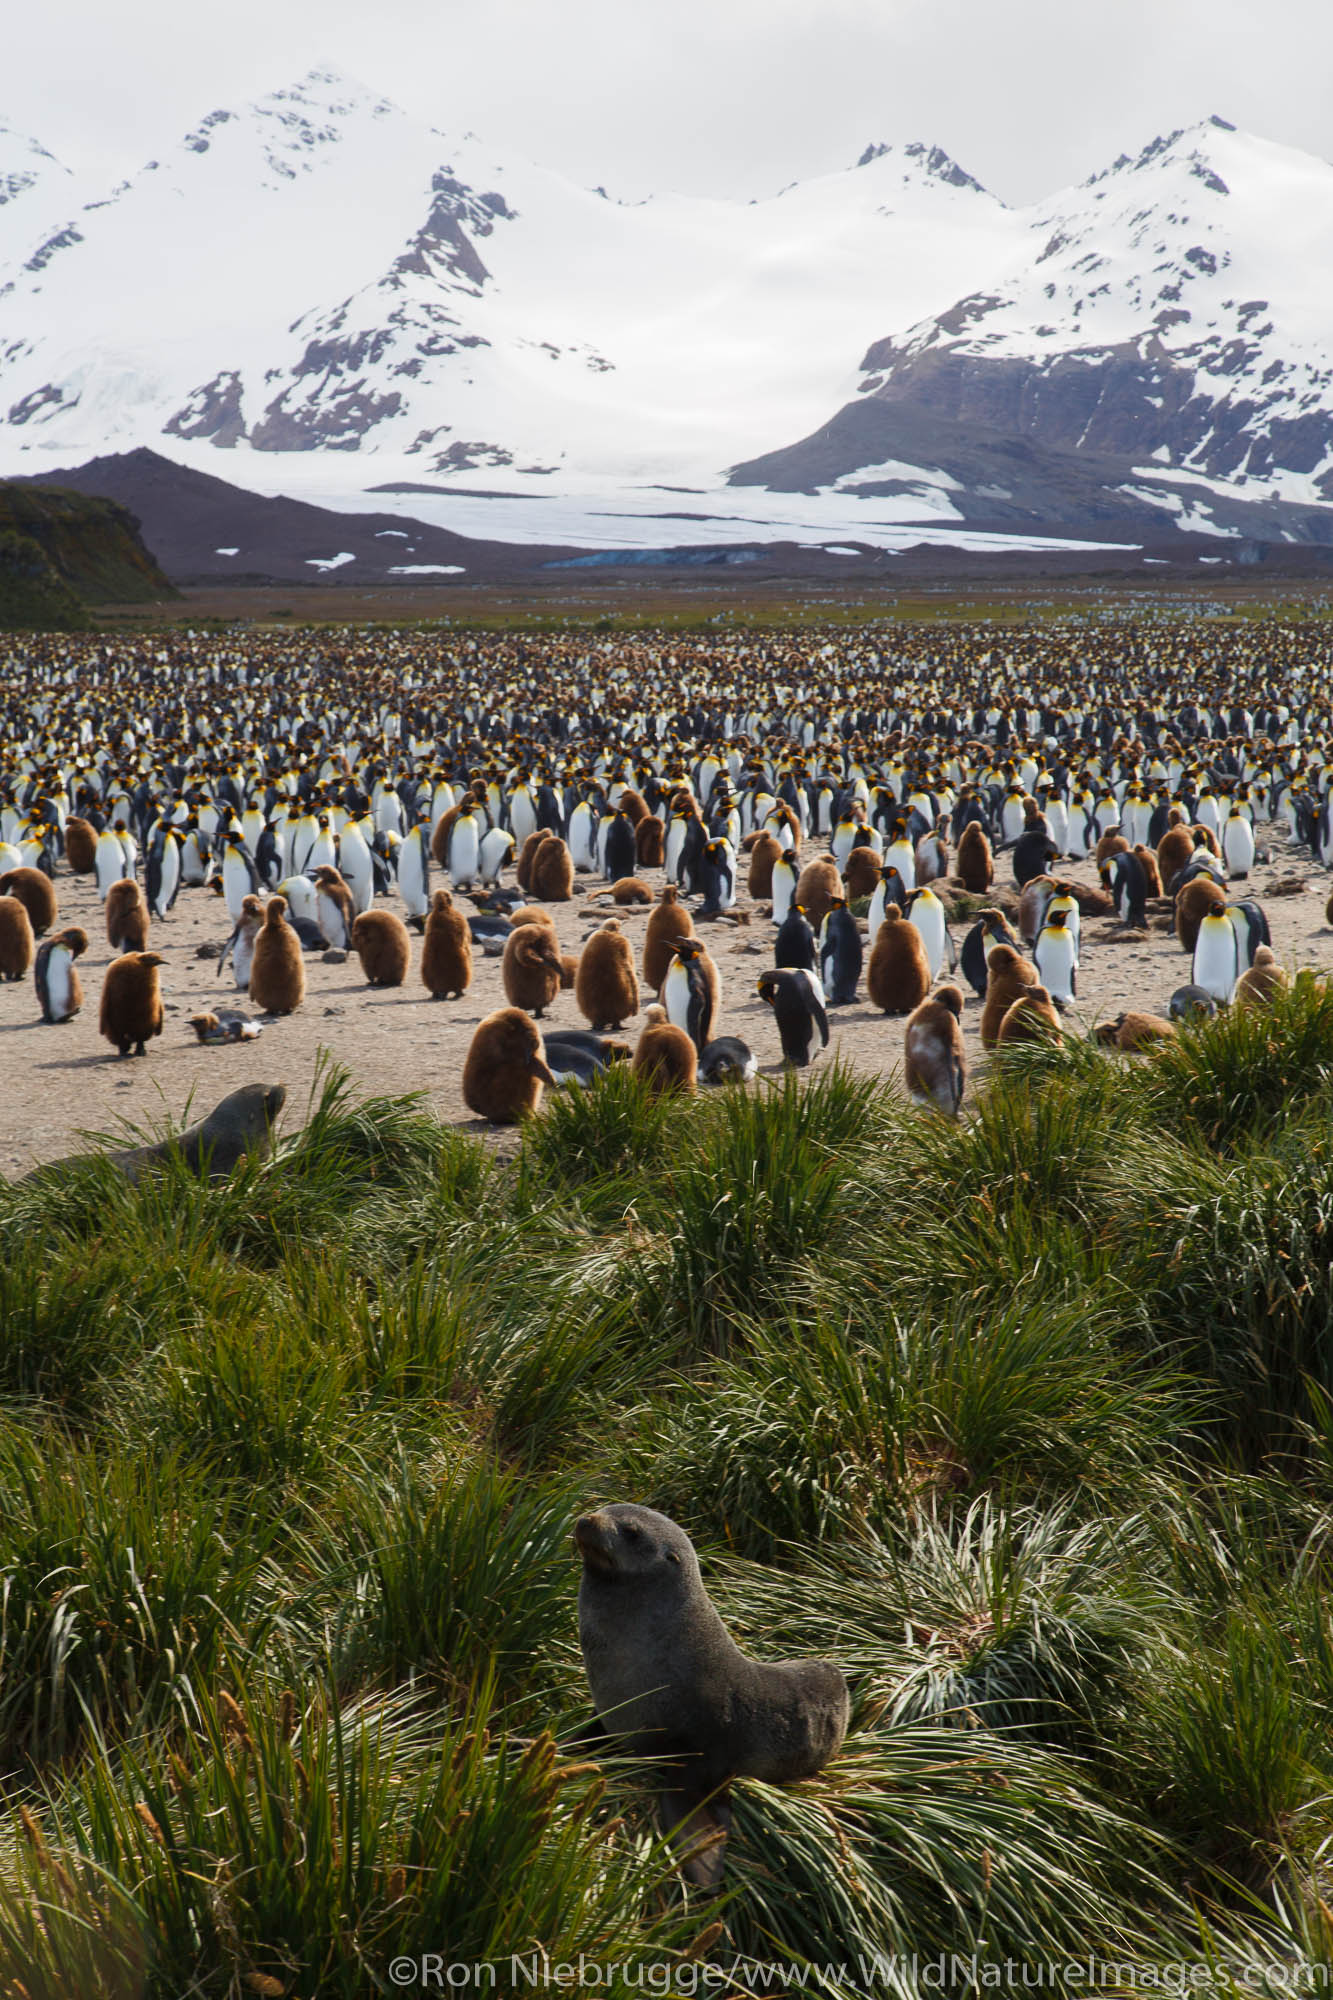 King penguins (Aptenodytes patagonicus) on the Salisbury Plain, South Georgia, Antarctica.